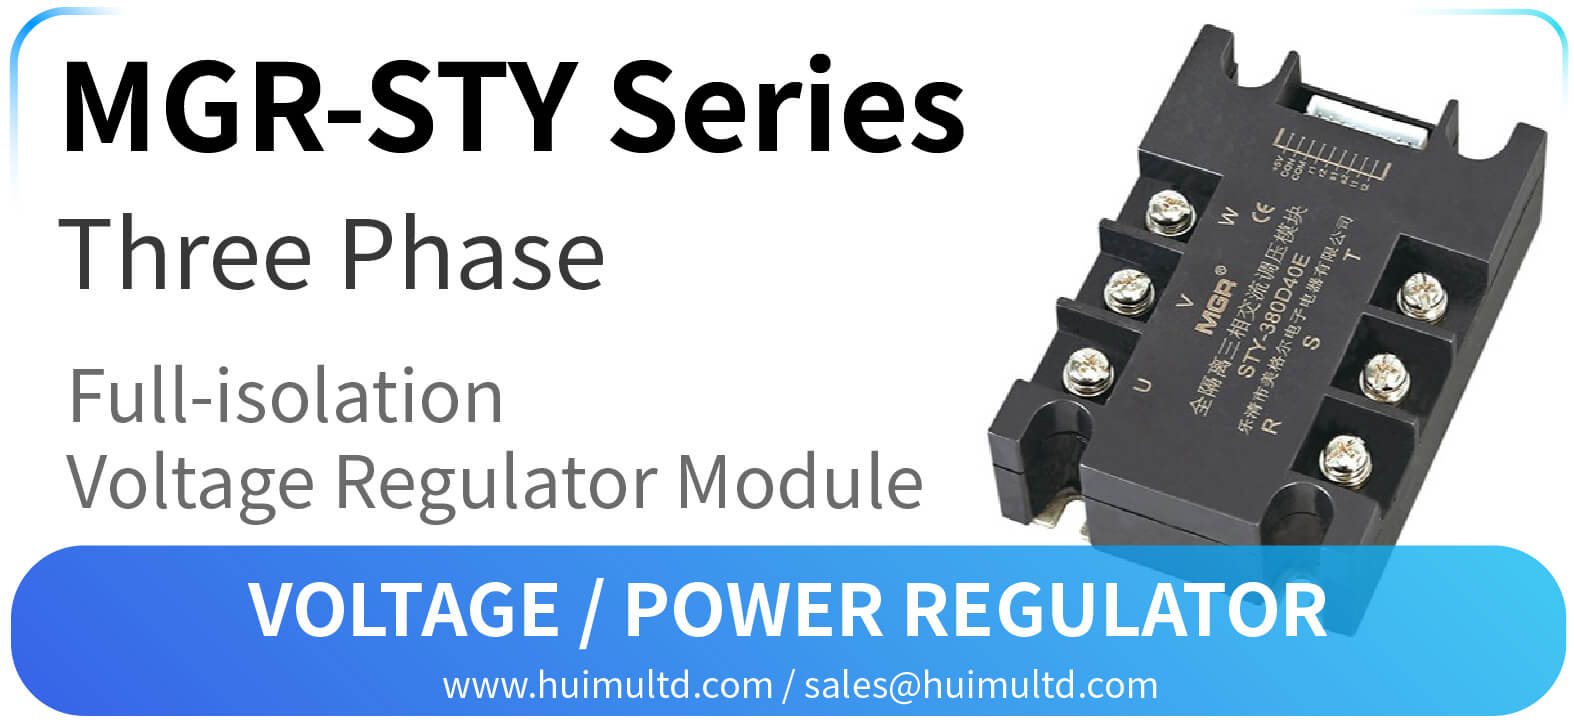 MGR-STY Series Voltage Power Regulator